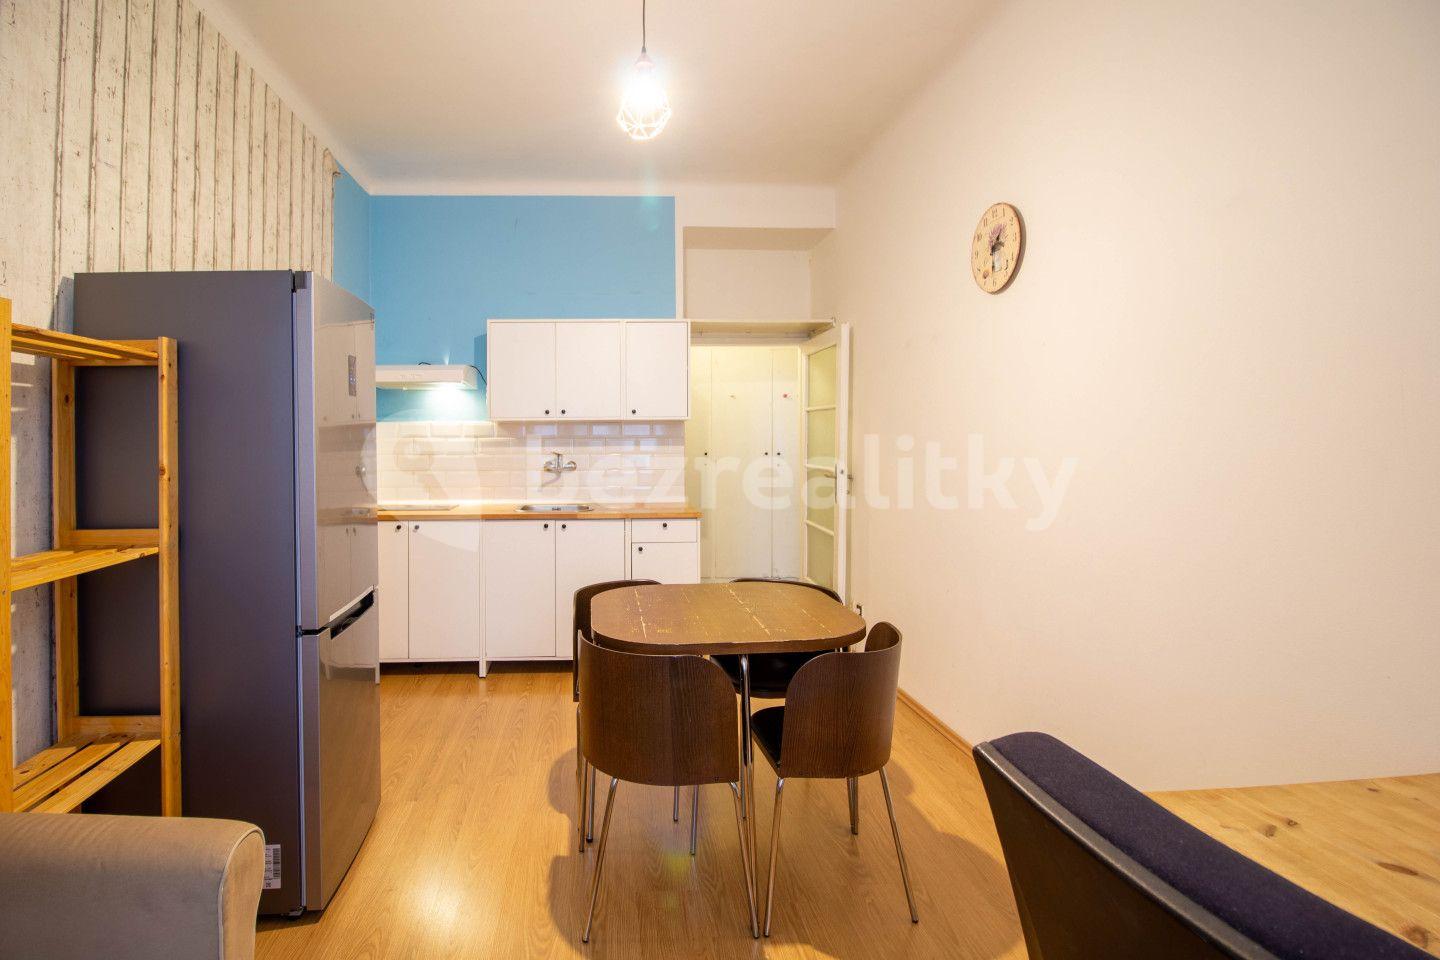 1 bedroom with open-plan kitchen flat for sale, 41 m², Kouřimská, Prague, Prague